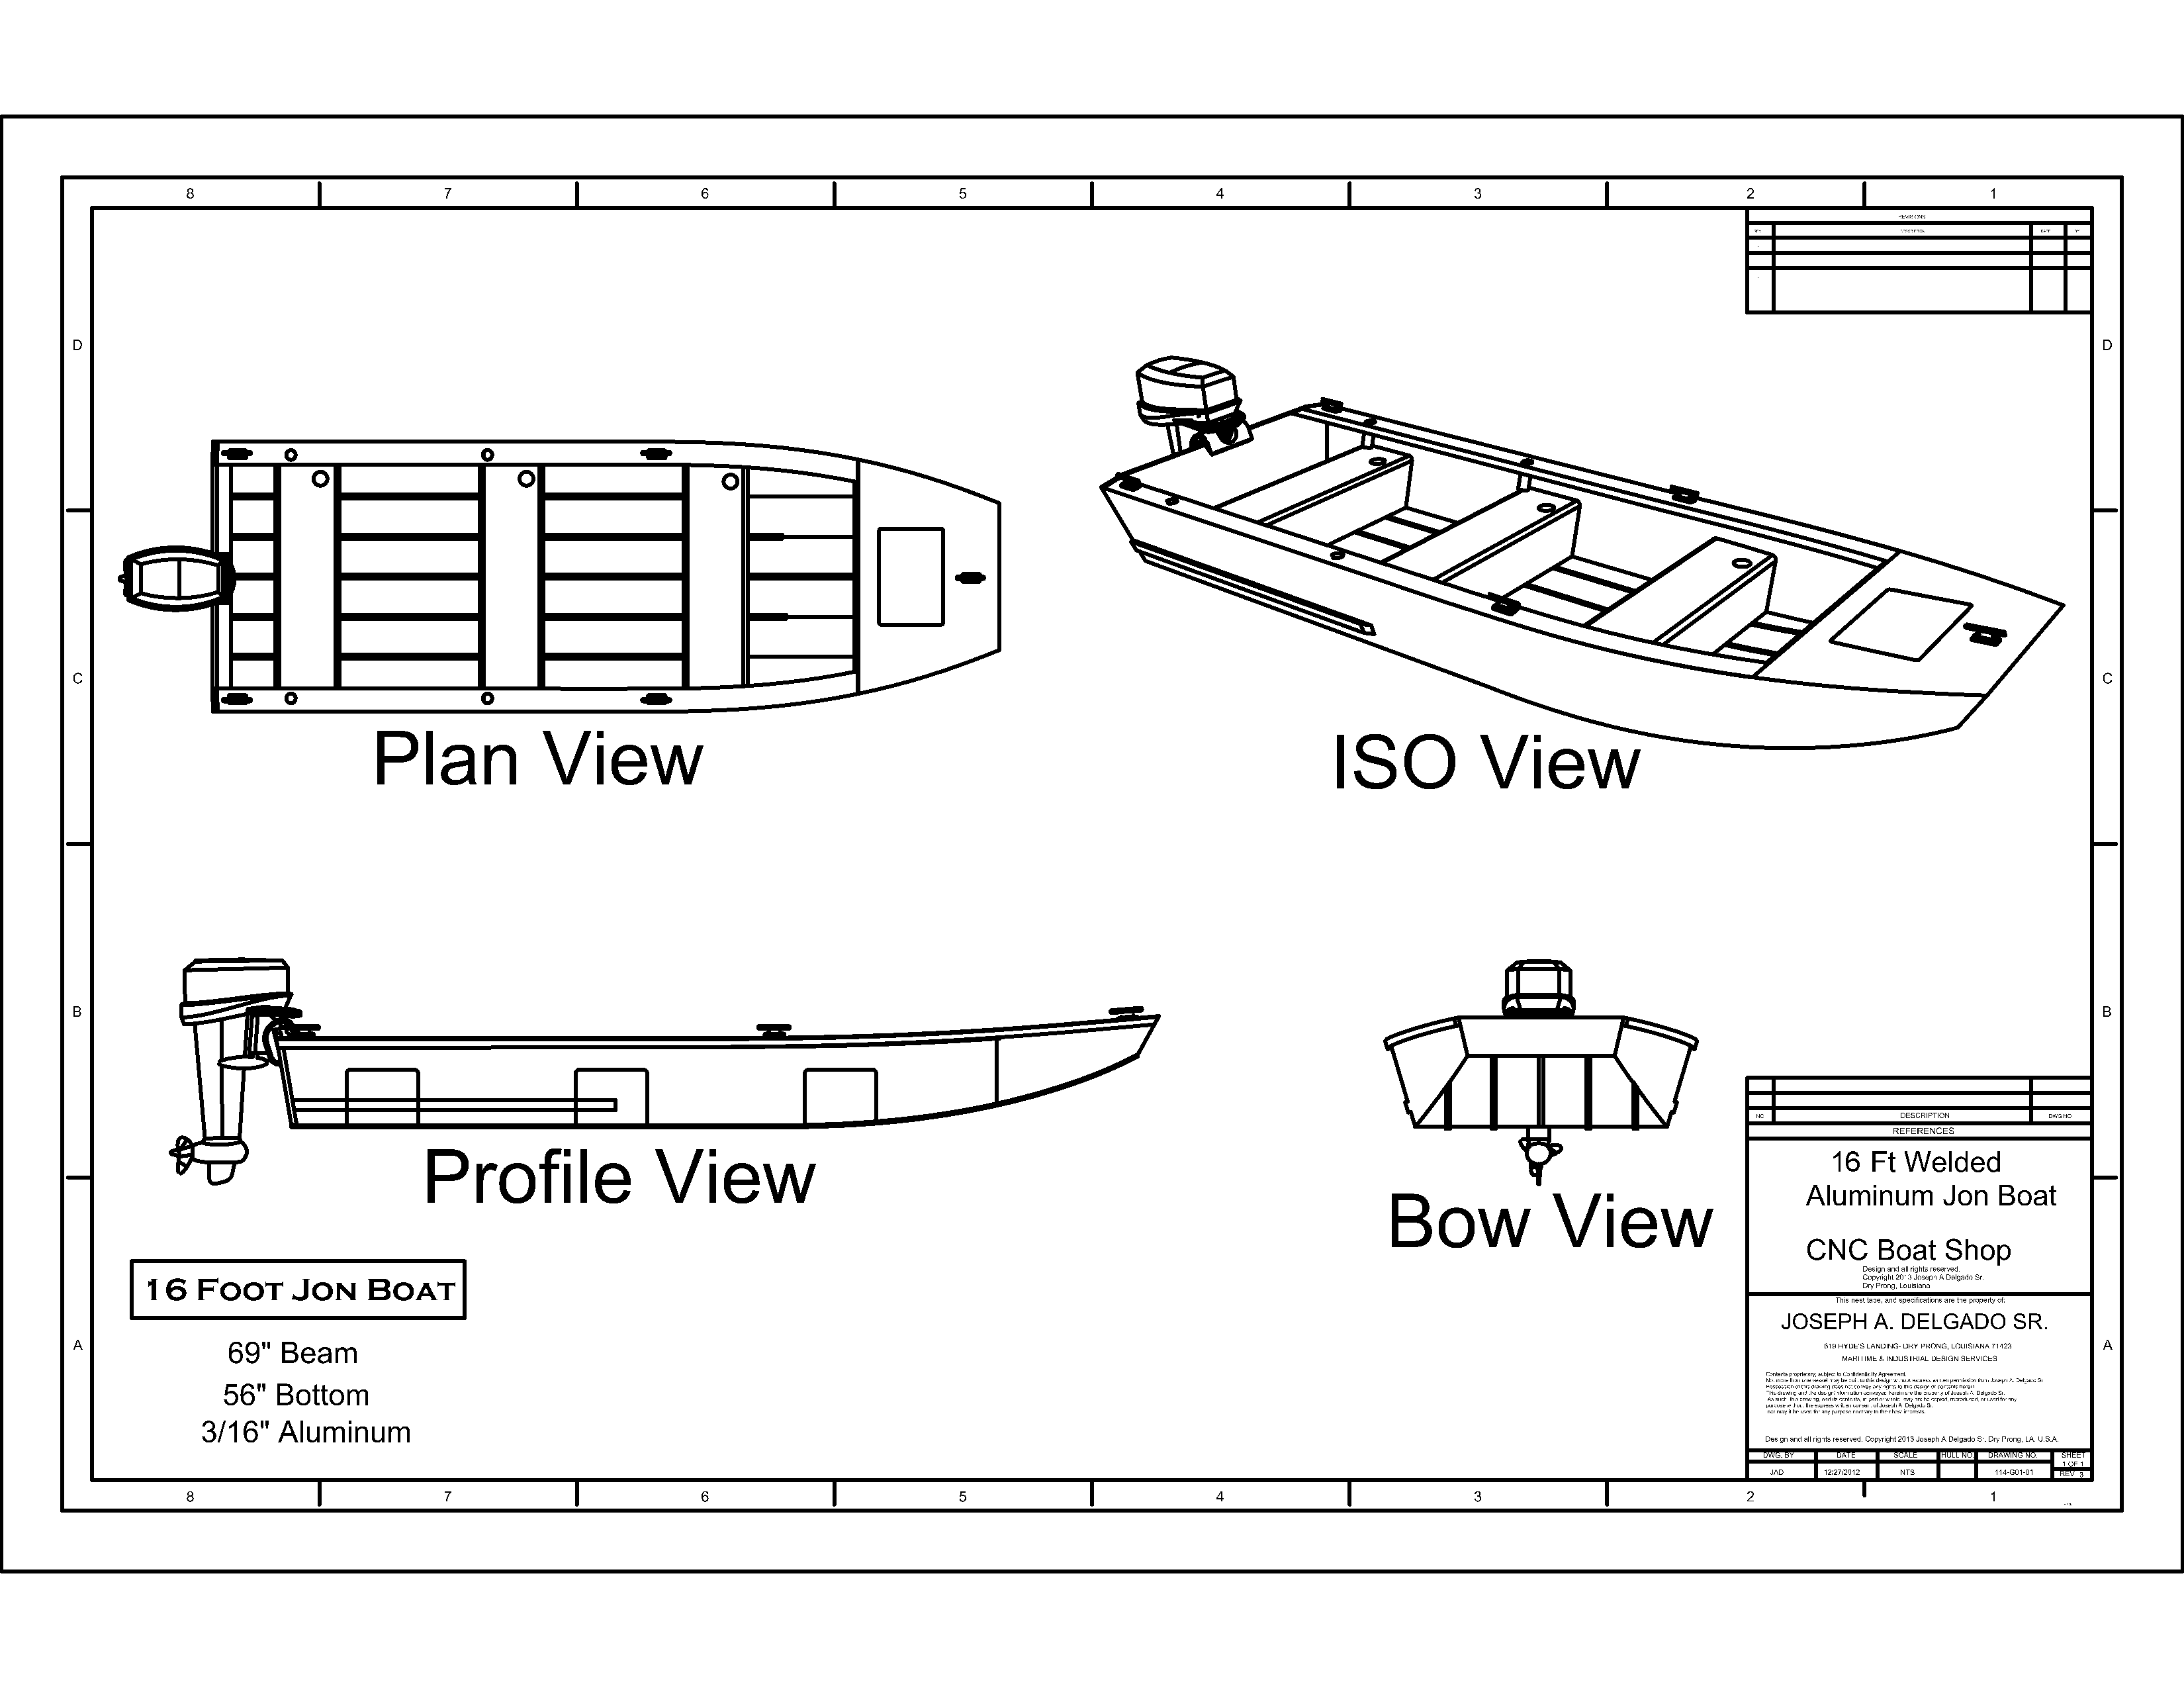 nyieun boat: Boat blind plans free